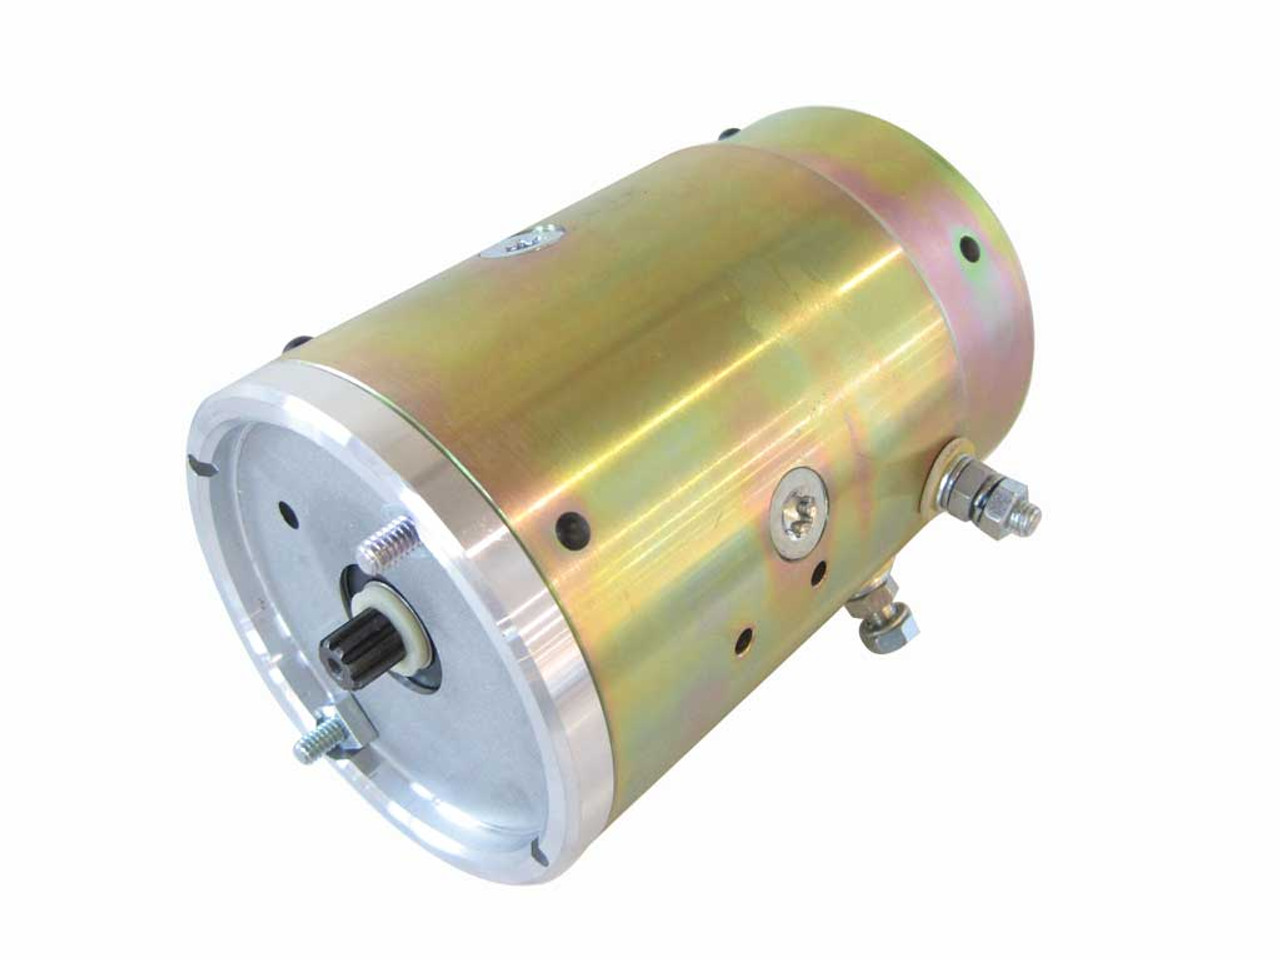 KTI 1245-18 12 Volt Electric Motor for Hydraulic Pumps